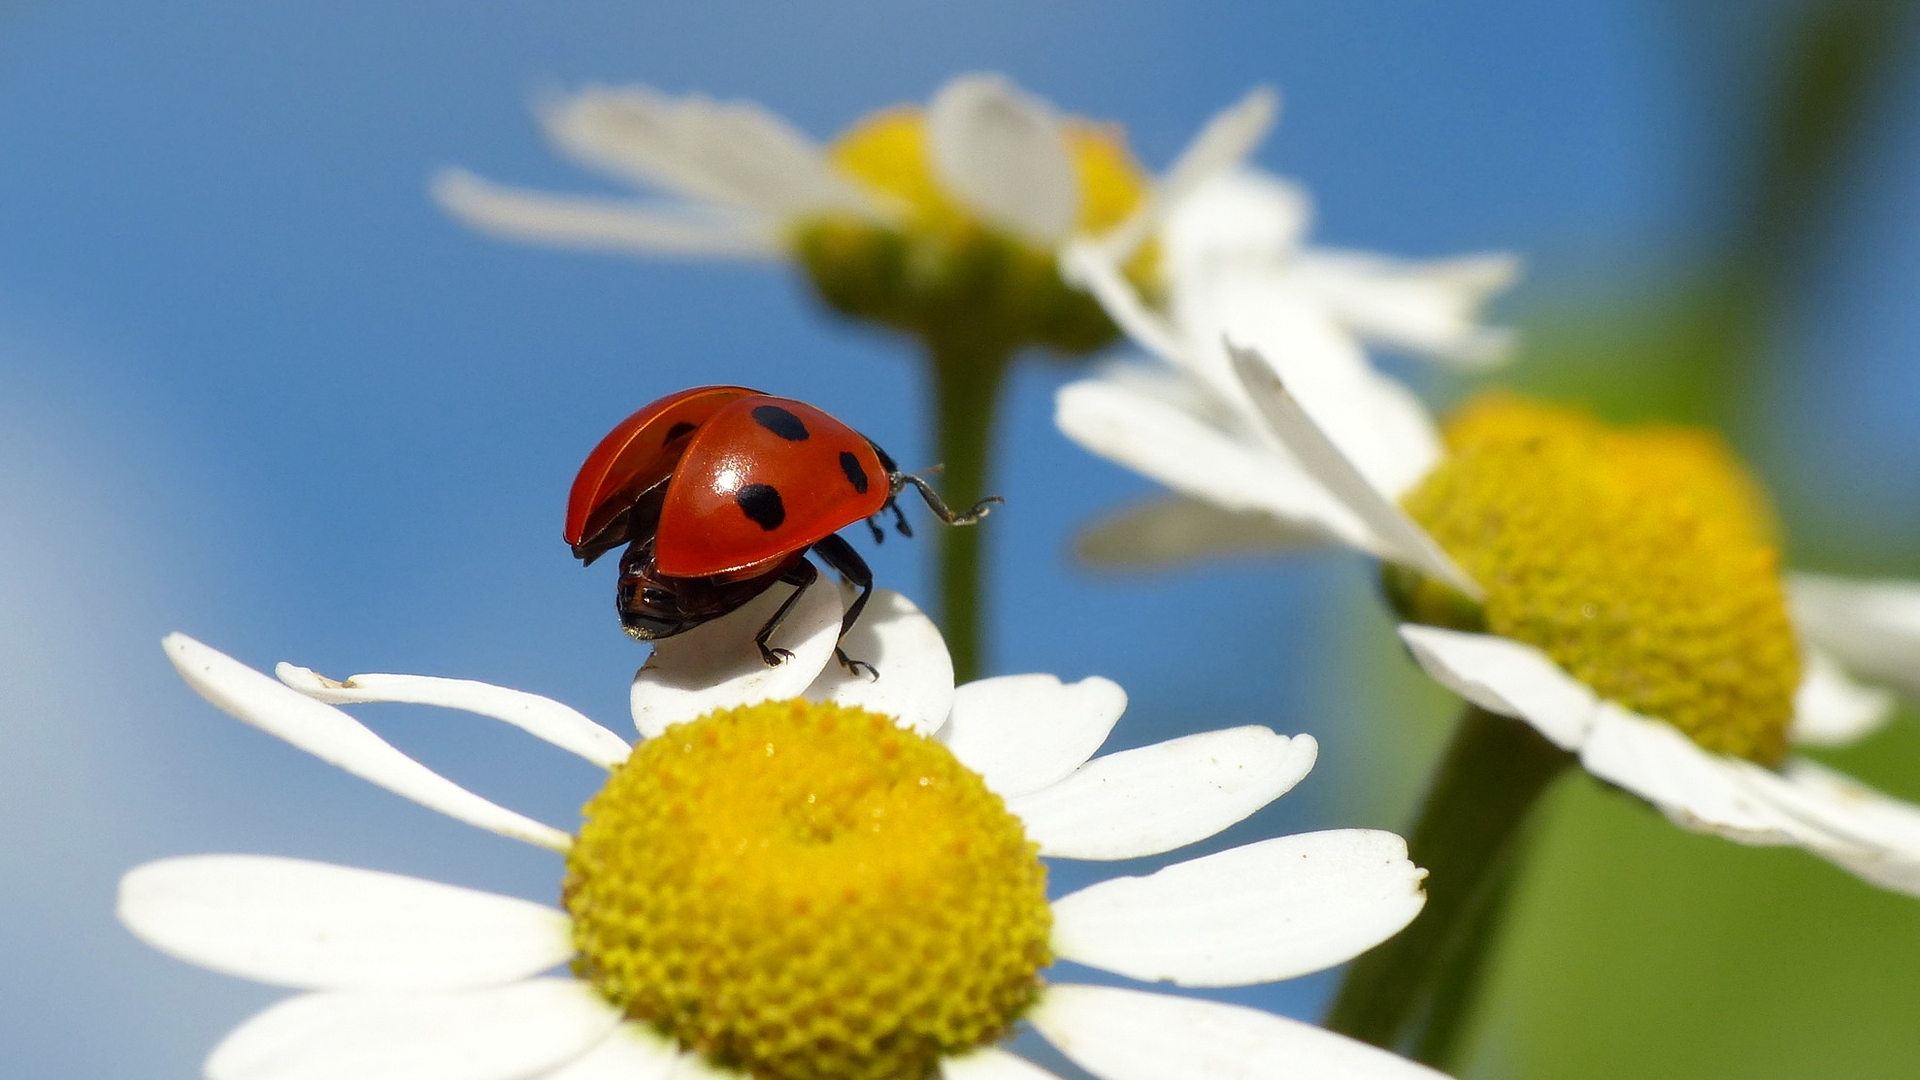 Ladybug on a Chamomile Flower for 1920 x 1080 HDTV 1080p resolution